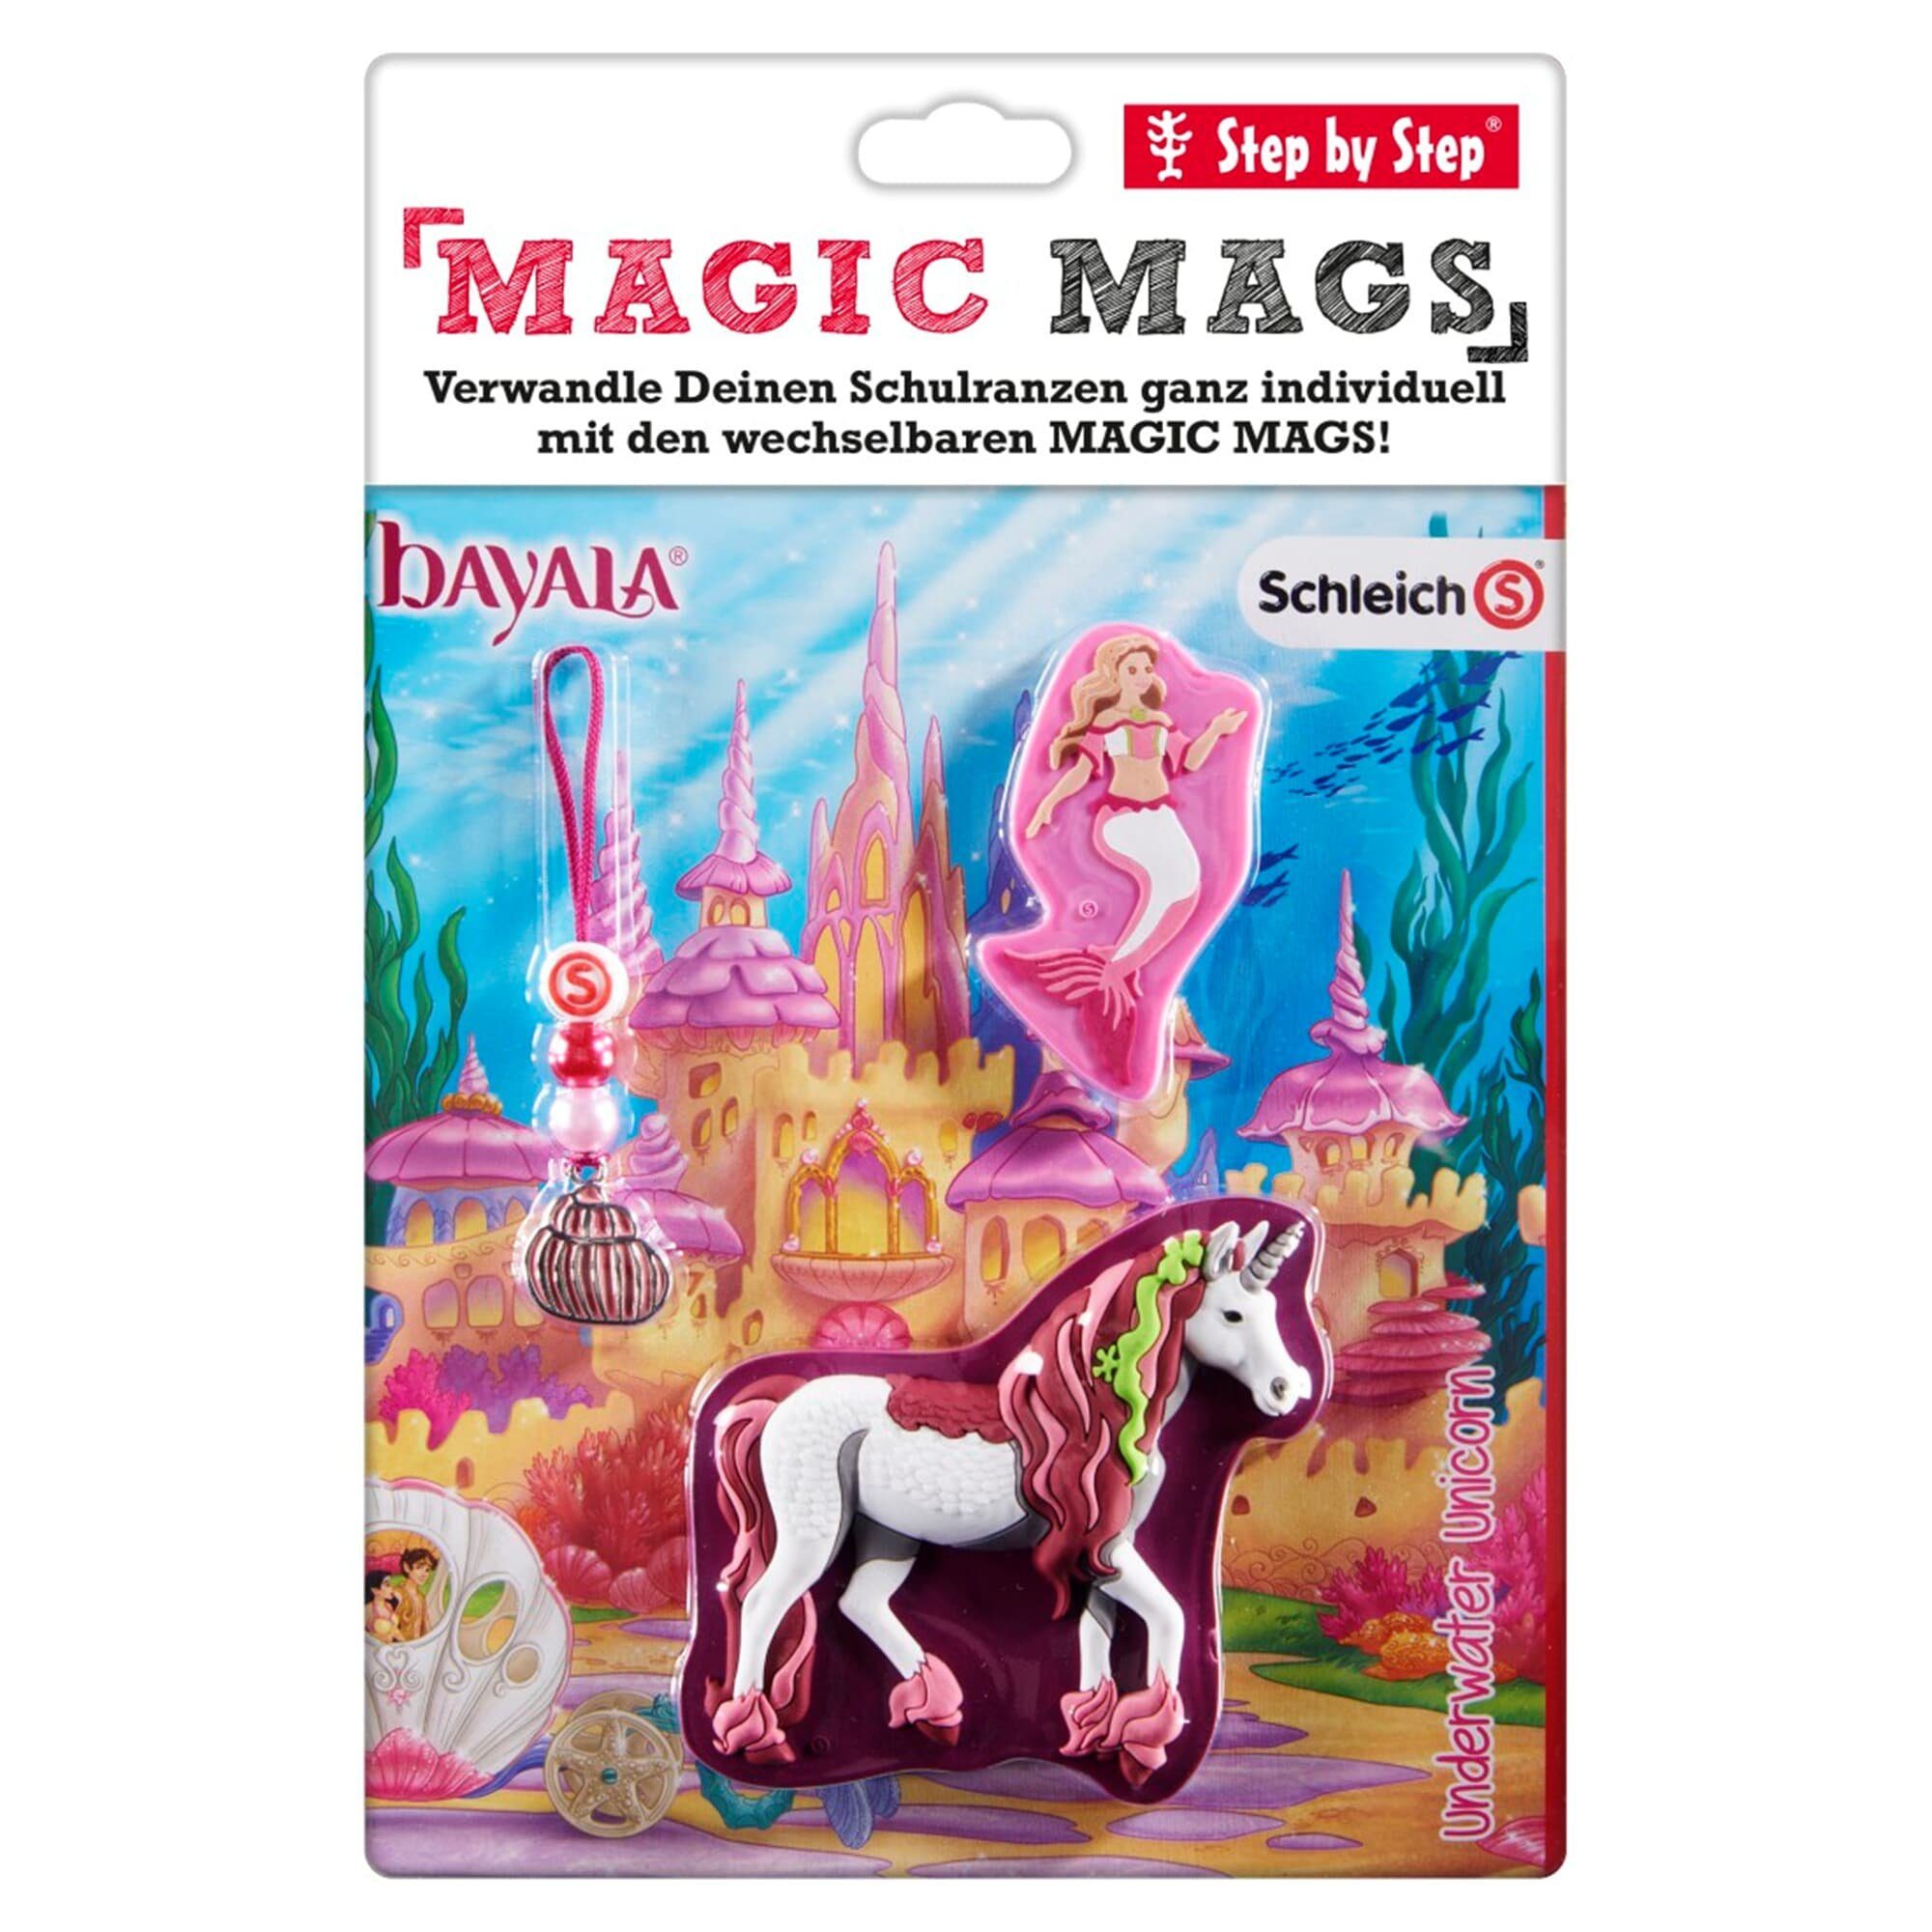 Step by Step Schulranzen MAGIC MAGS bayala®, Underwater Unicorn